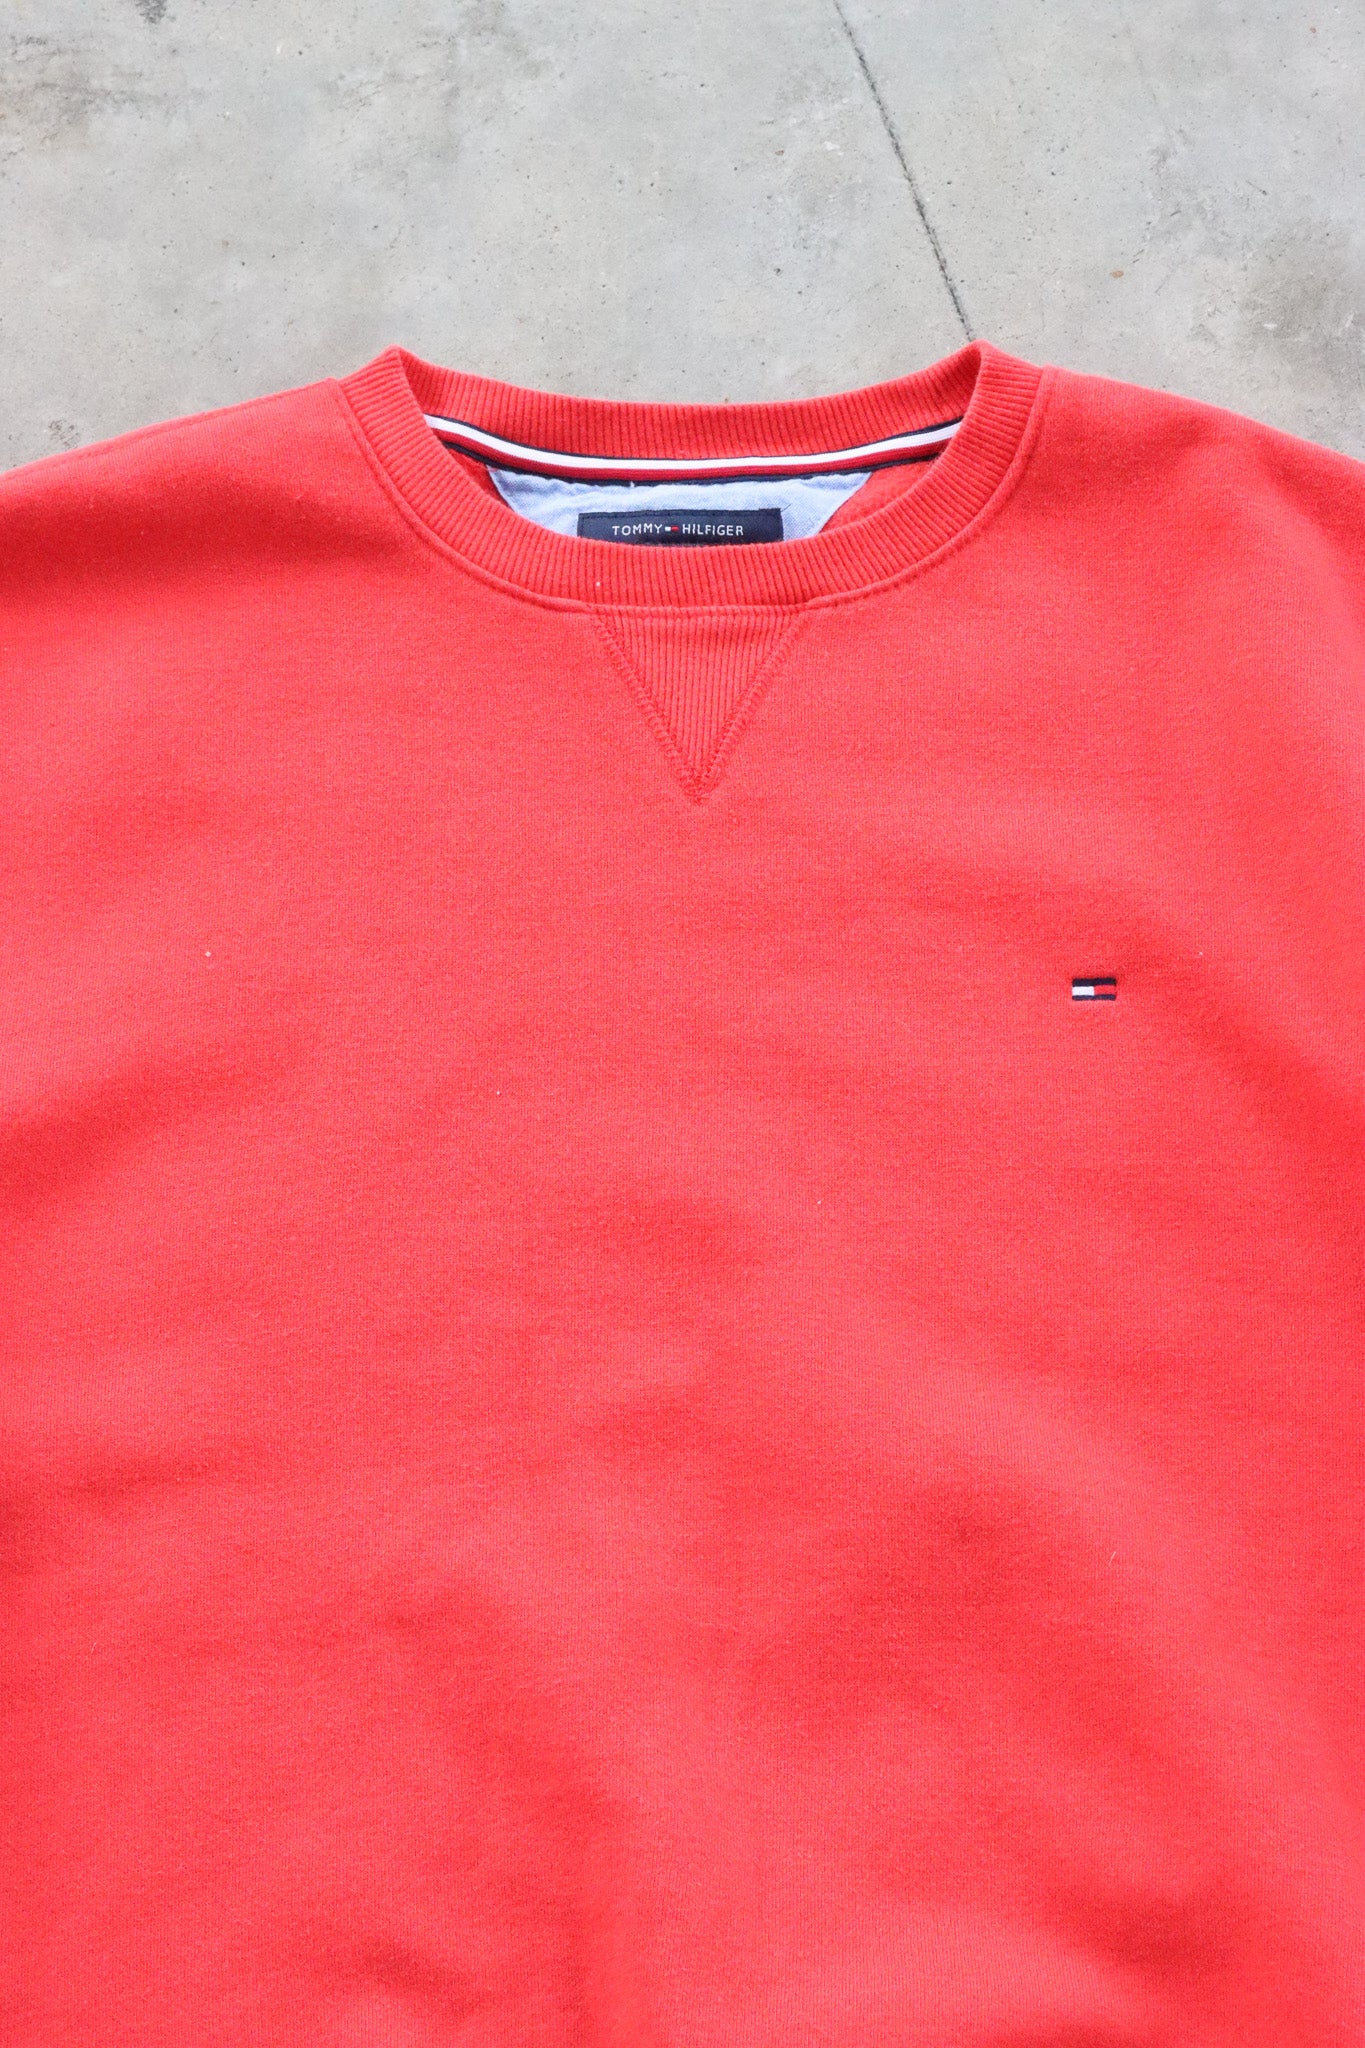 Vintage Tommy Hilfiger Sweater XL